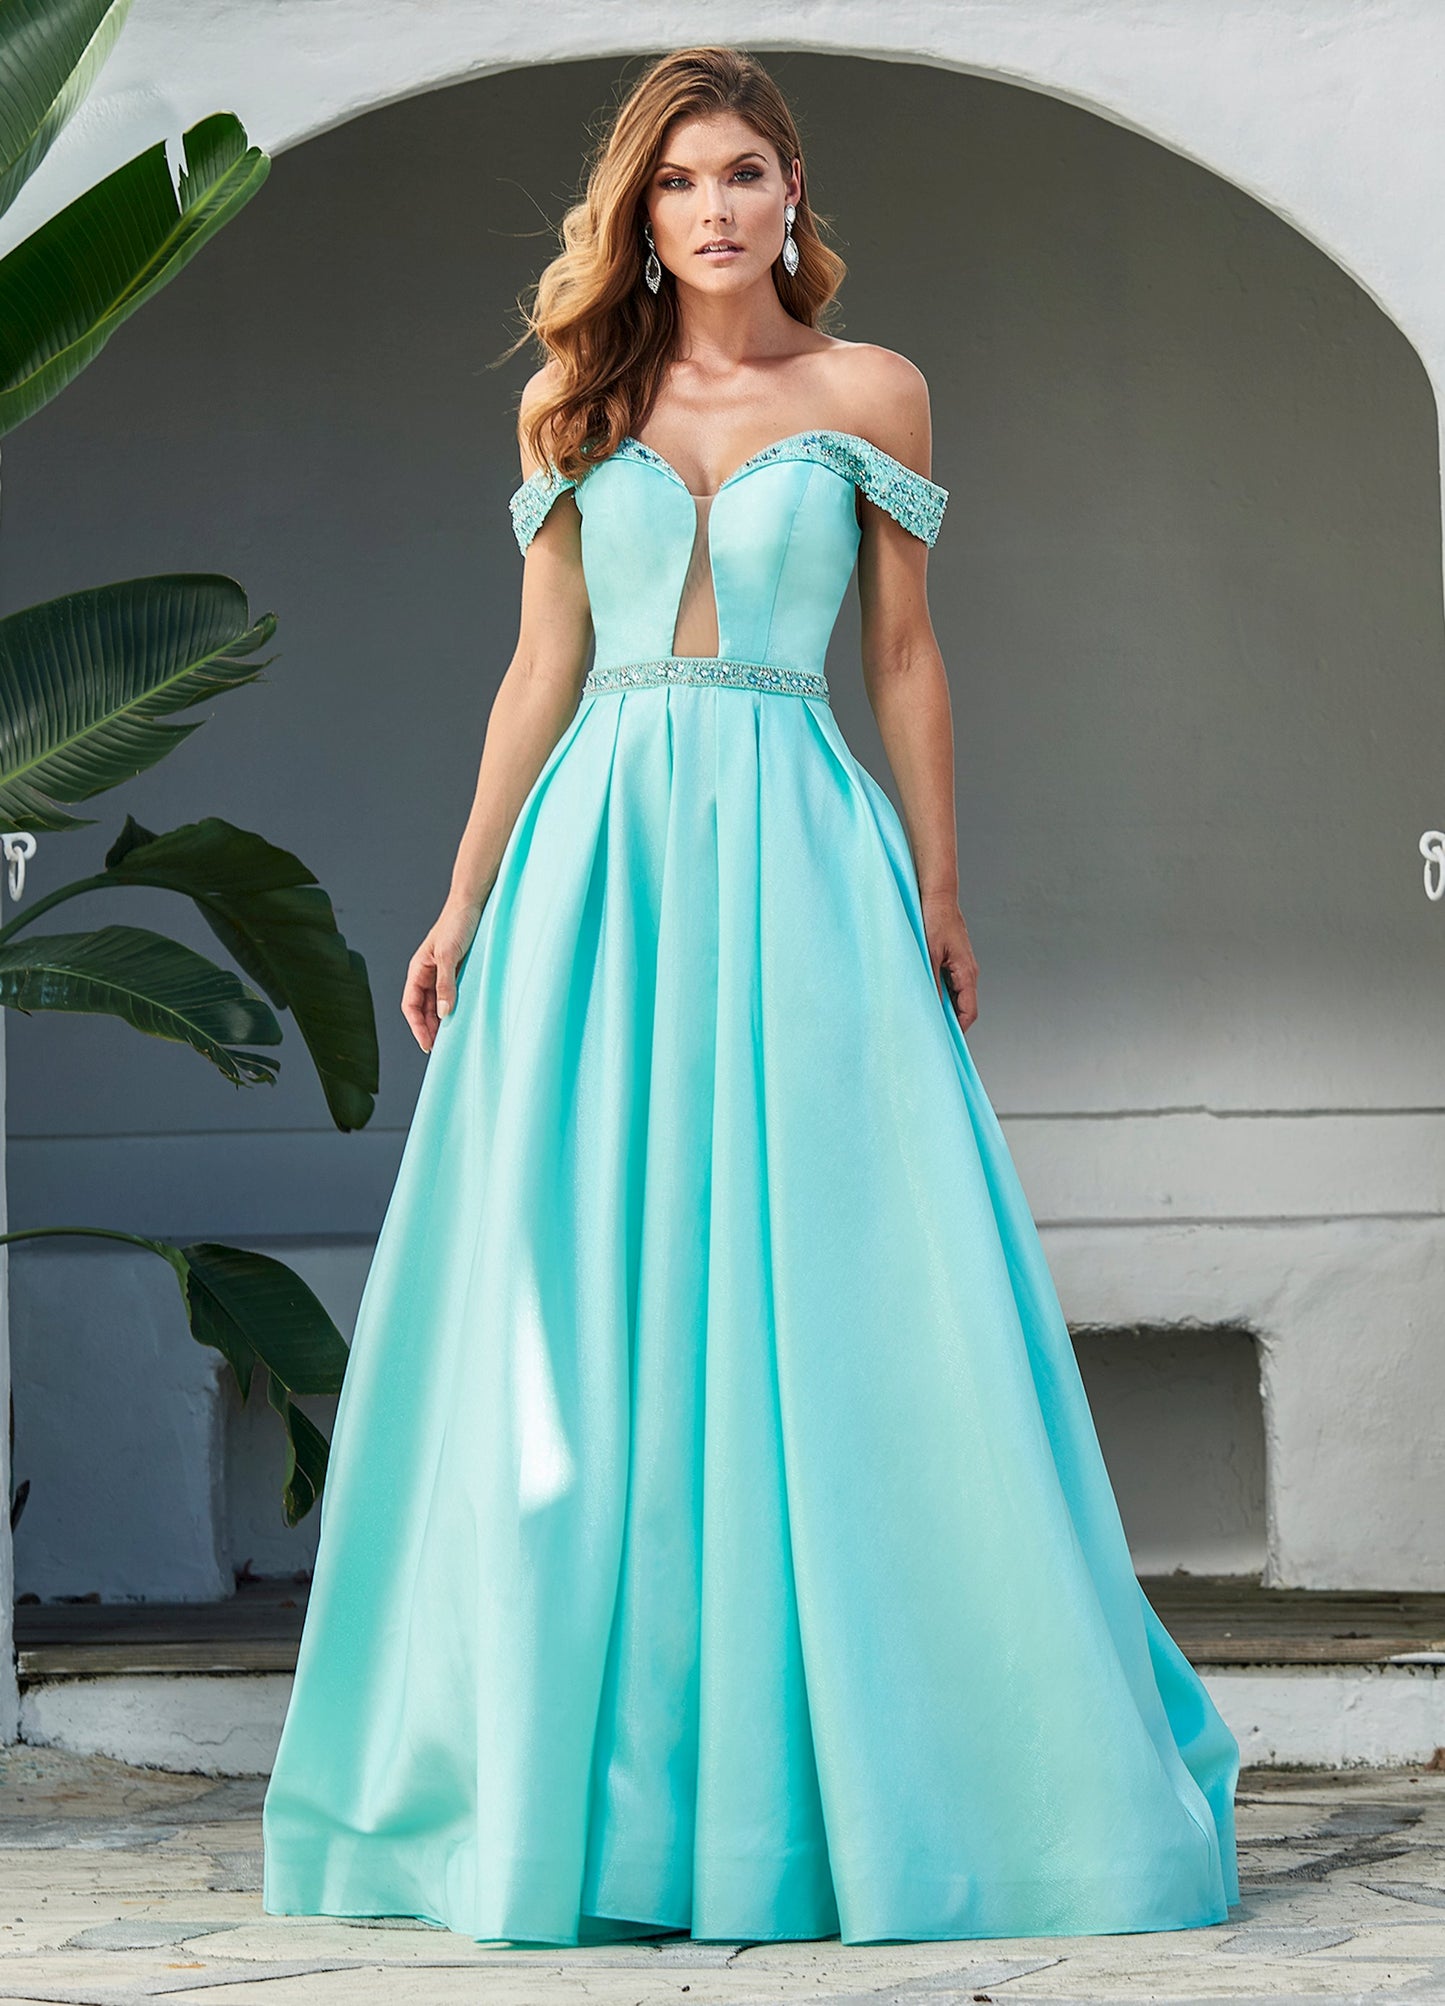 Ashley Lauren 1476 Prom Dress Aqua size 6 Off the Shoulder Ballgown Evening A line